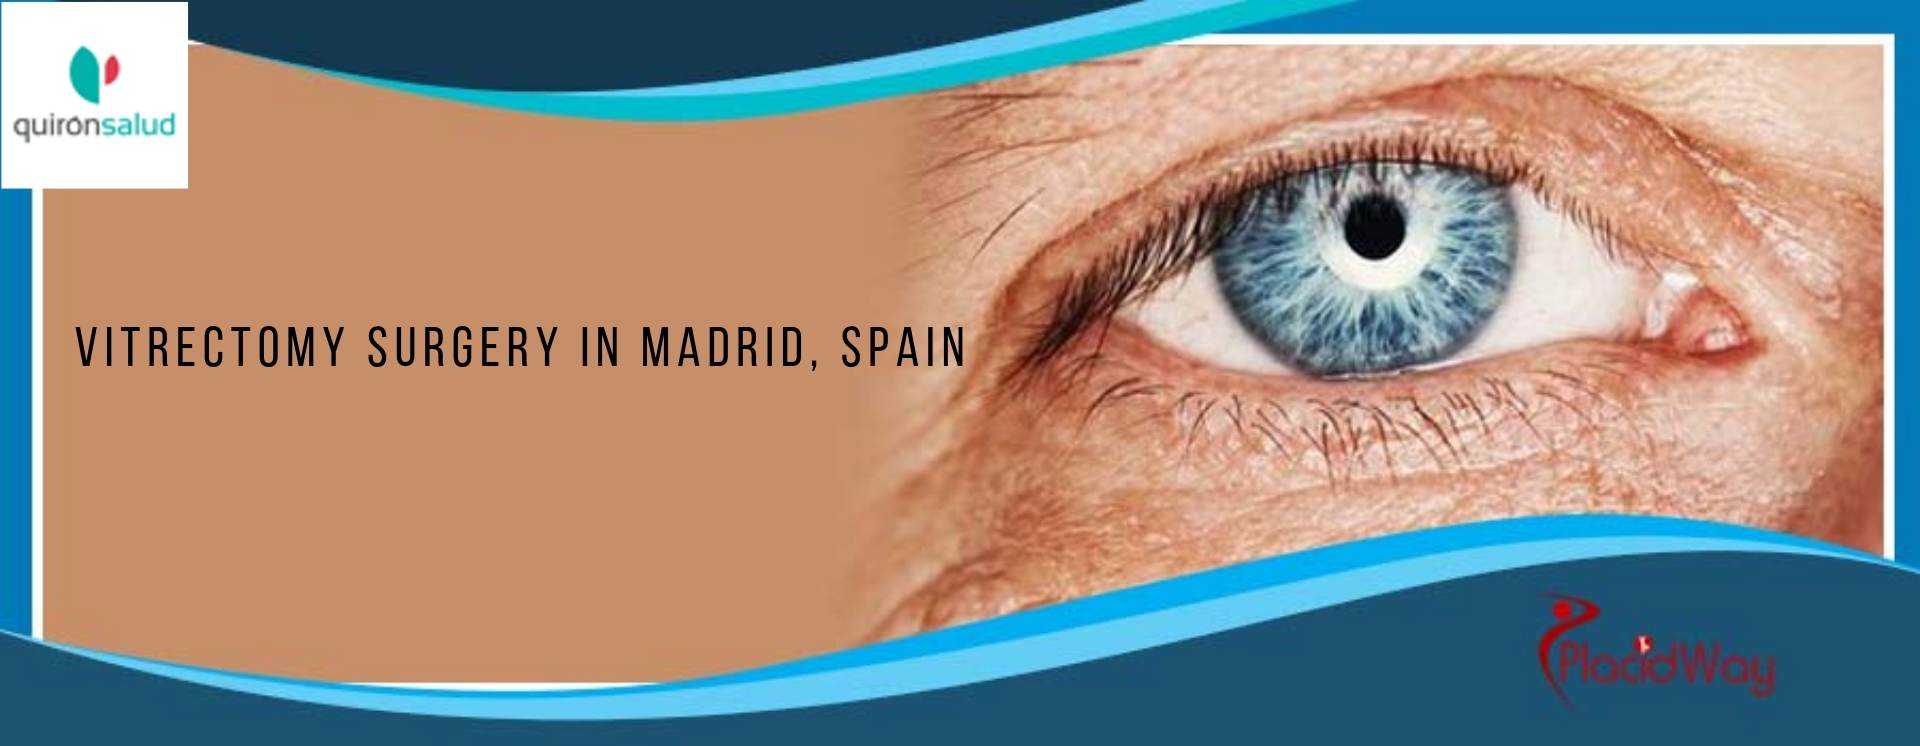 Vitrectomy Surgery in Madrid, Spain